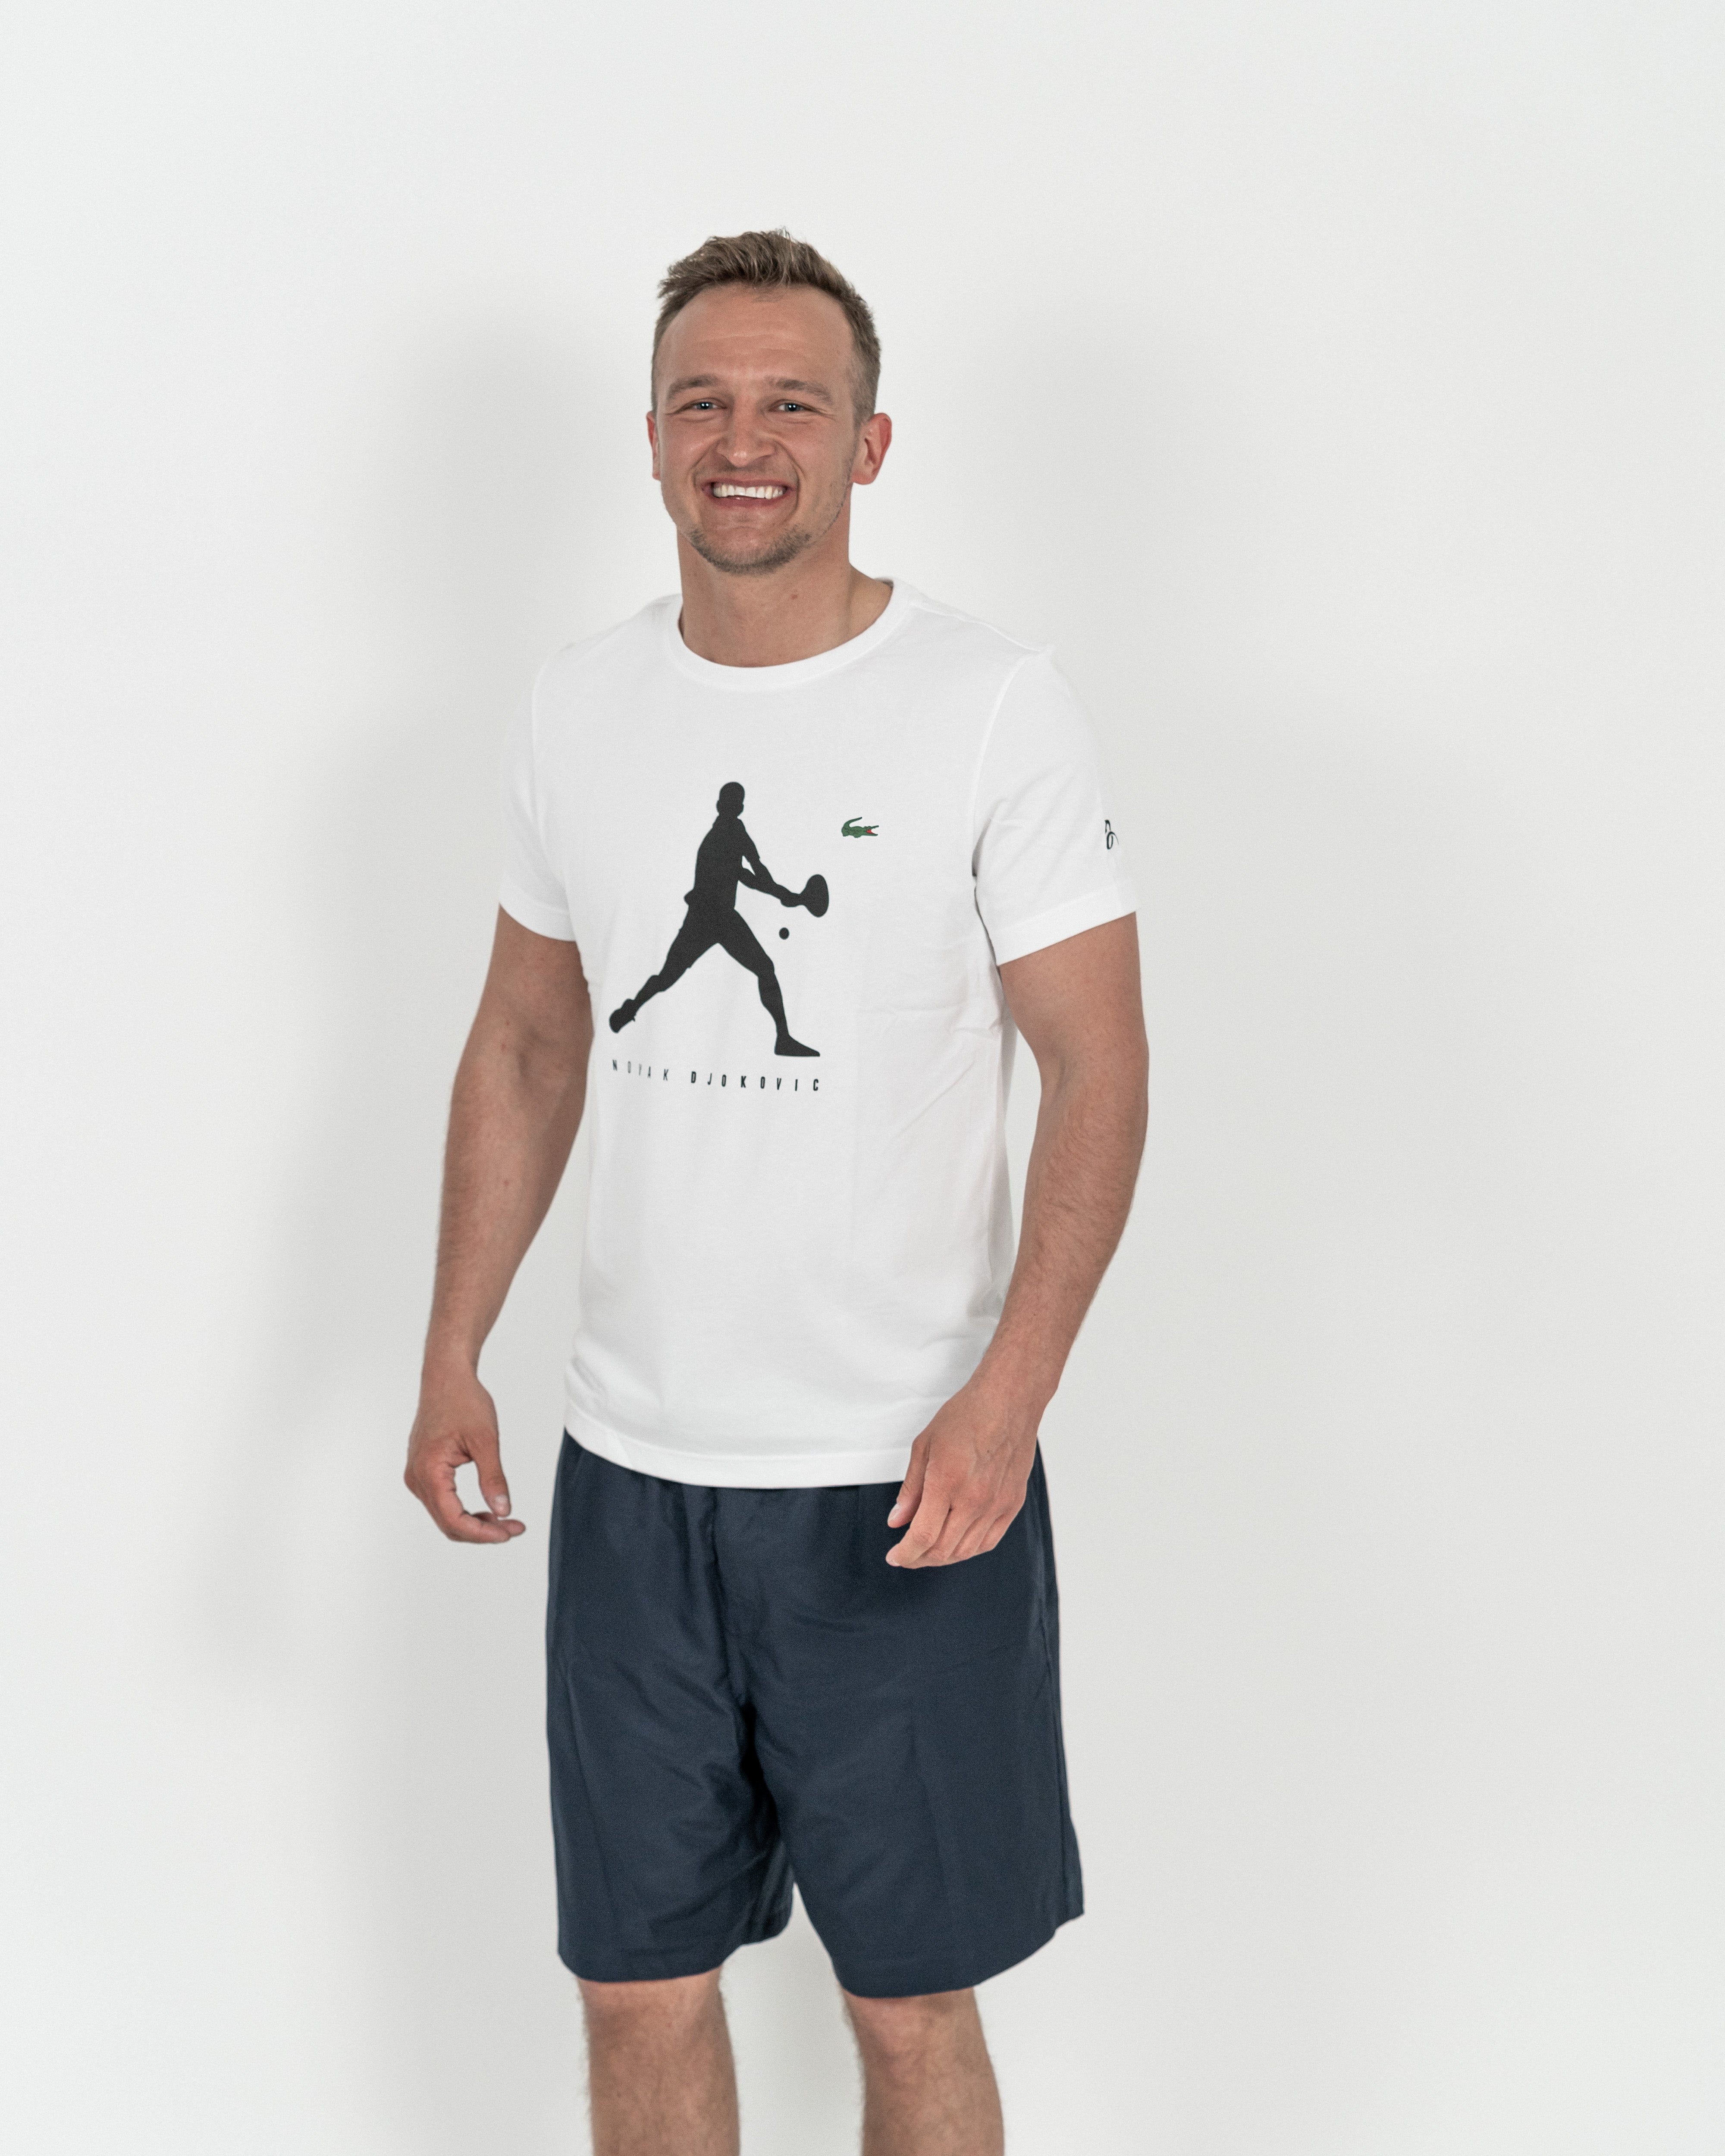 Buy A Mens Lacoste Novak Djokovic Graphic T-Shirt Online